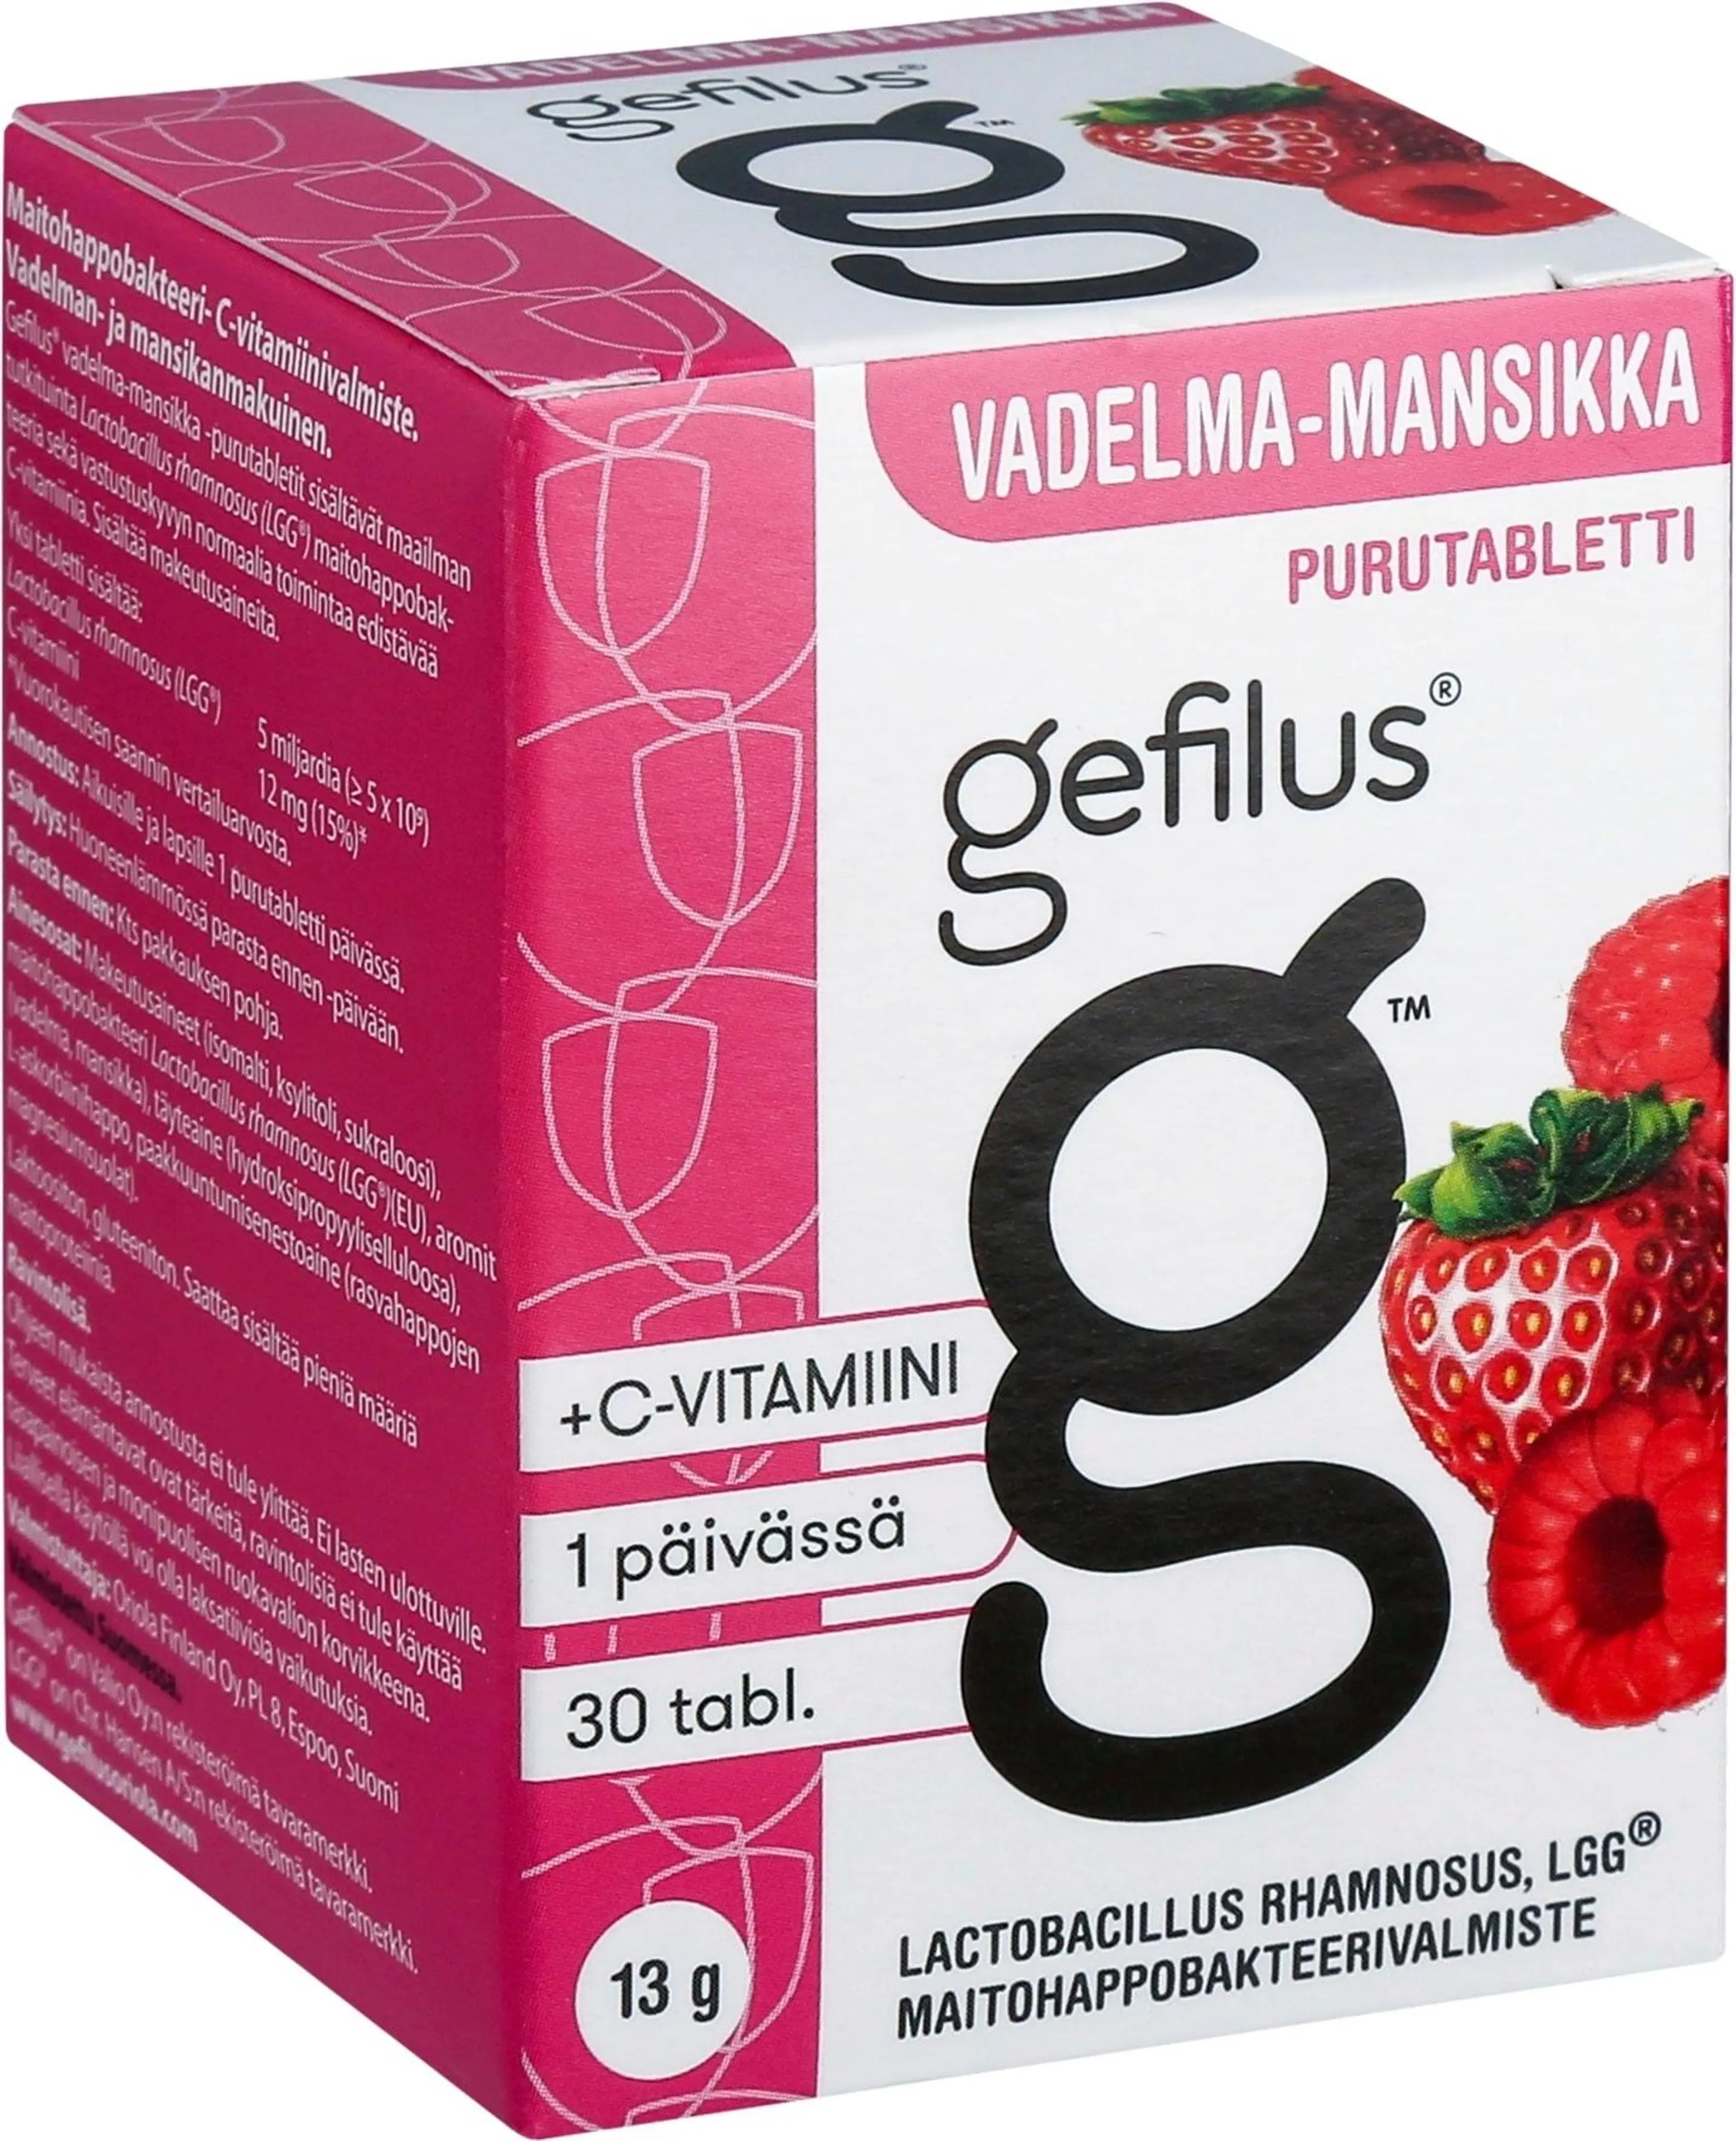 Gefilus vadelma-mansikka maitohappobakteeri-C-vitamiinivalmiste purutabletti 30tabl 13g ravintolisä